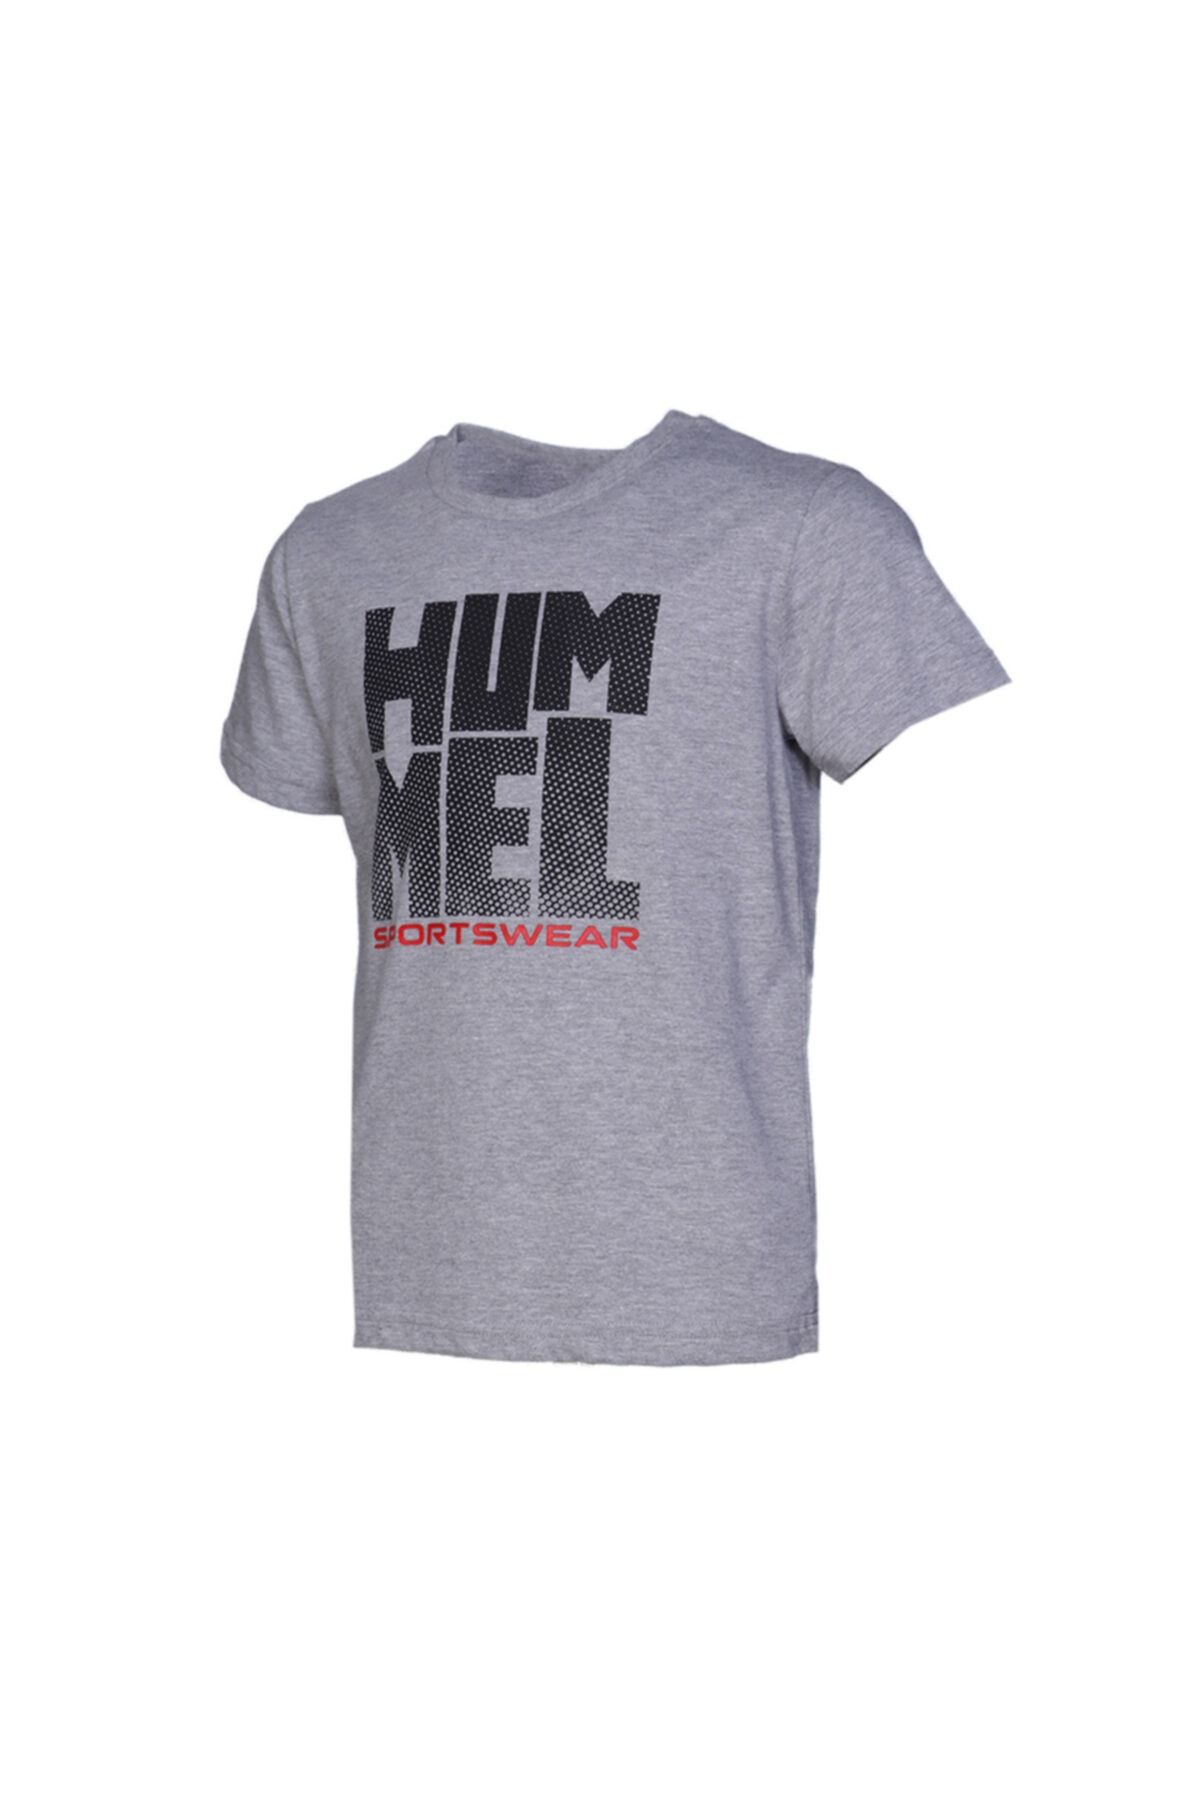 hummel HMLGRAYSON  T-SHIRT S/S GRI MELANJ Erkek Çocuk T-Shirt 100580642